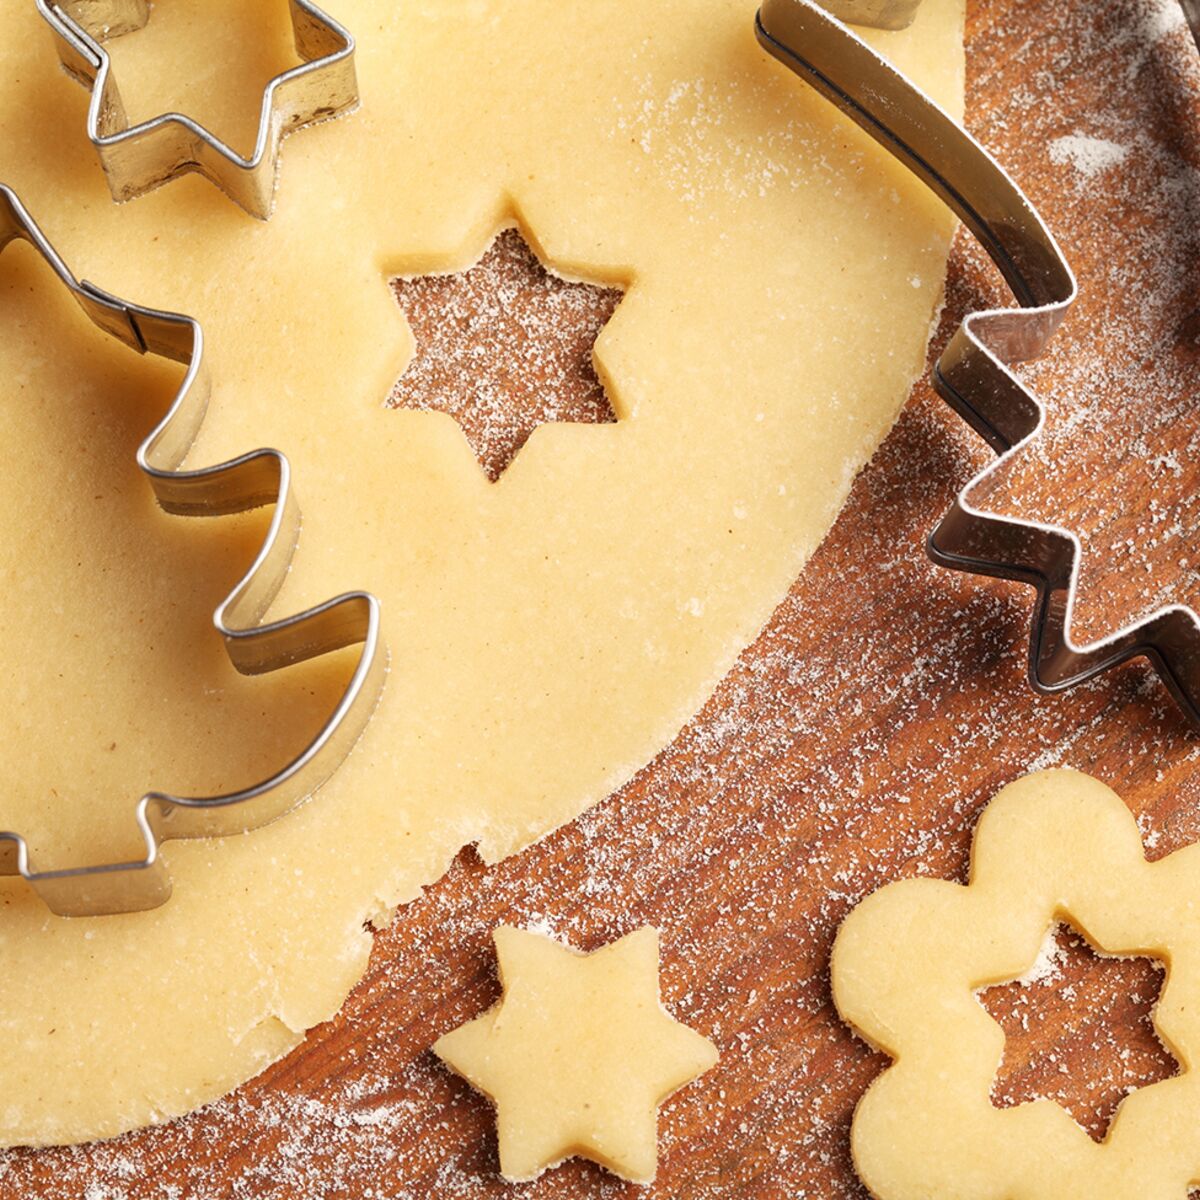 Emporte-pièce Noël boule à neige - Biscuits de Noël originaux